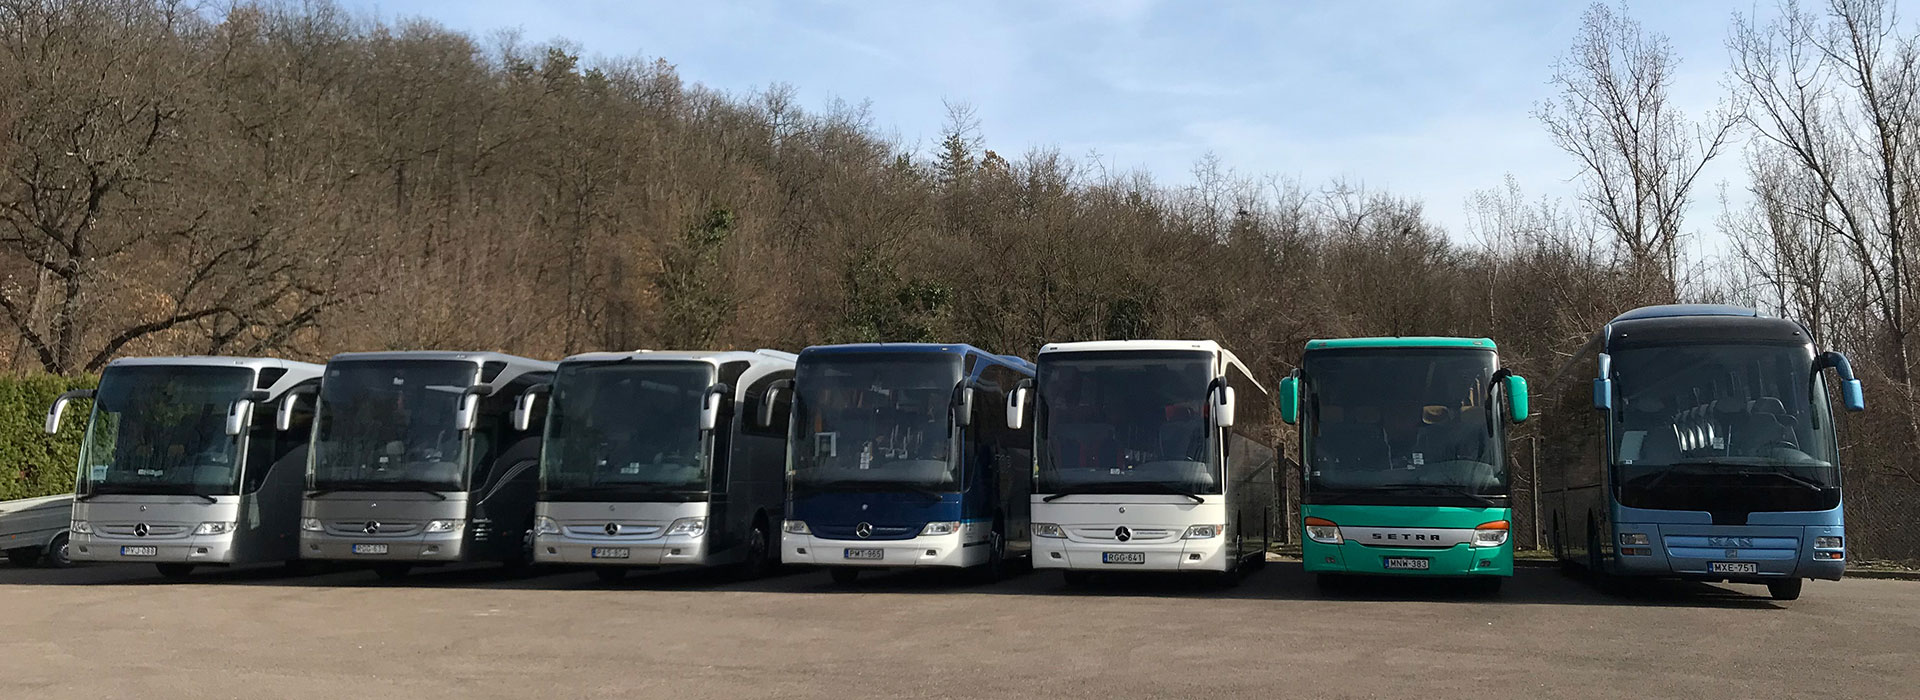 Our bus fleet